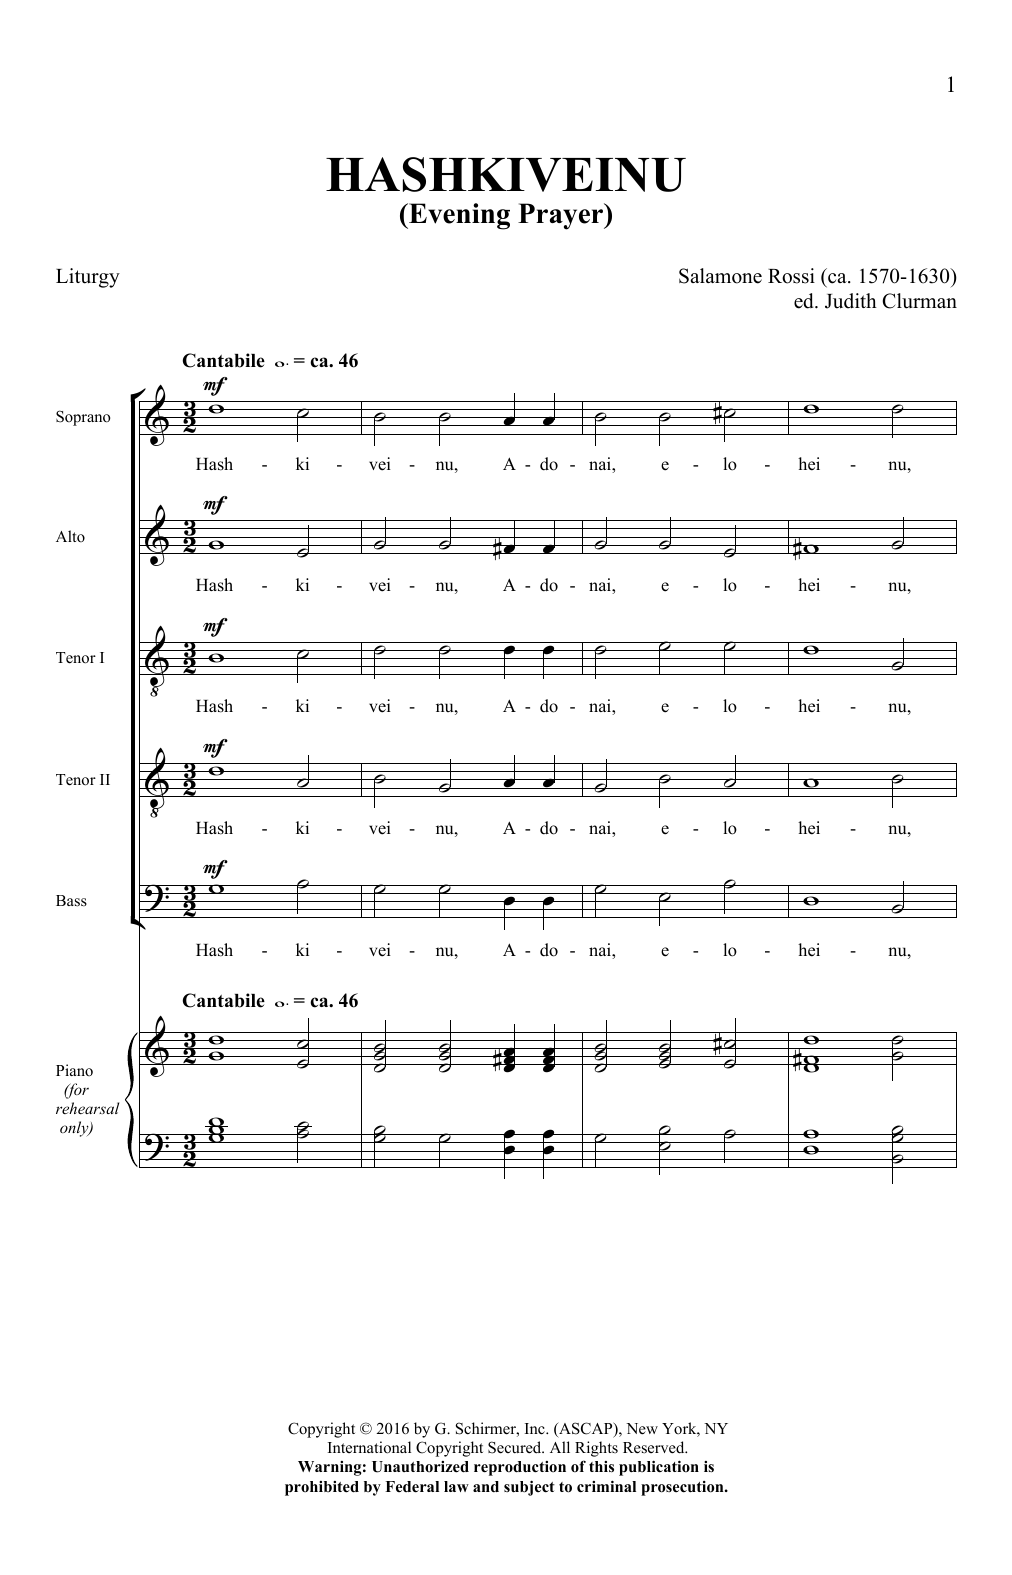 Salamone Rossi Hashkiveinu Sheet Music Notes & Chords for SATB - Download or Print PDF